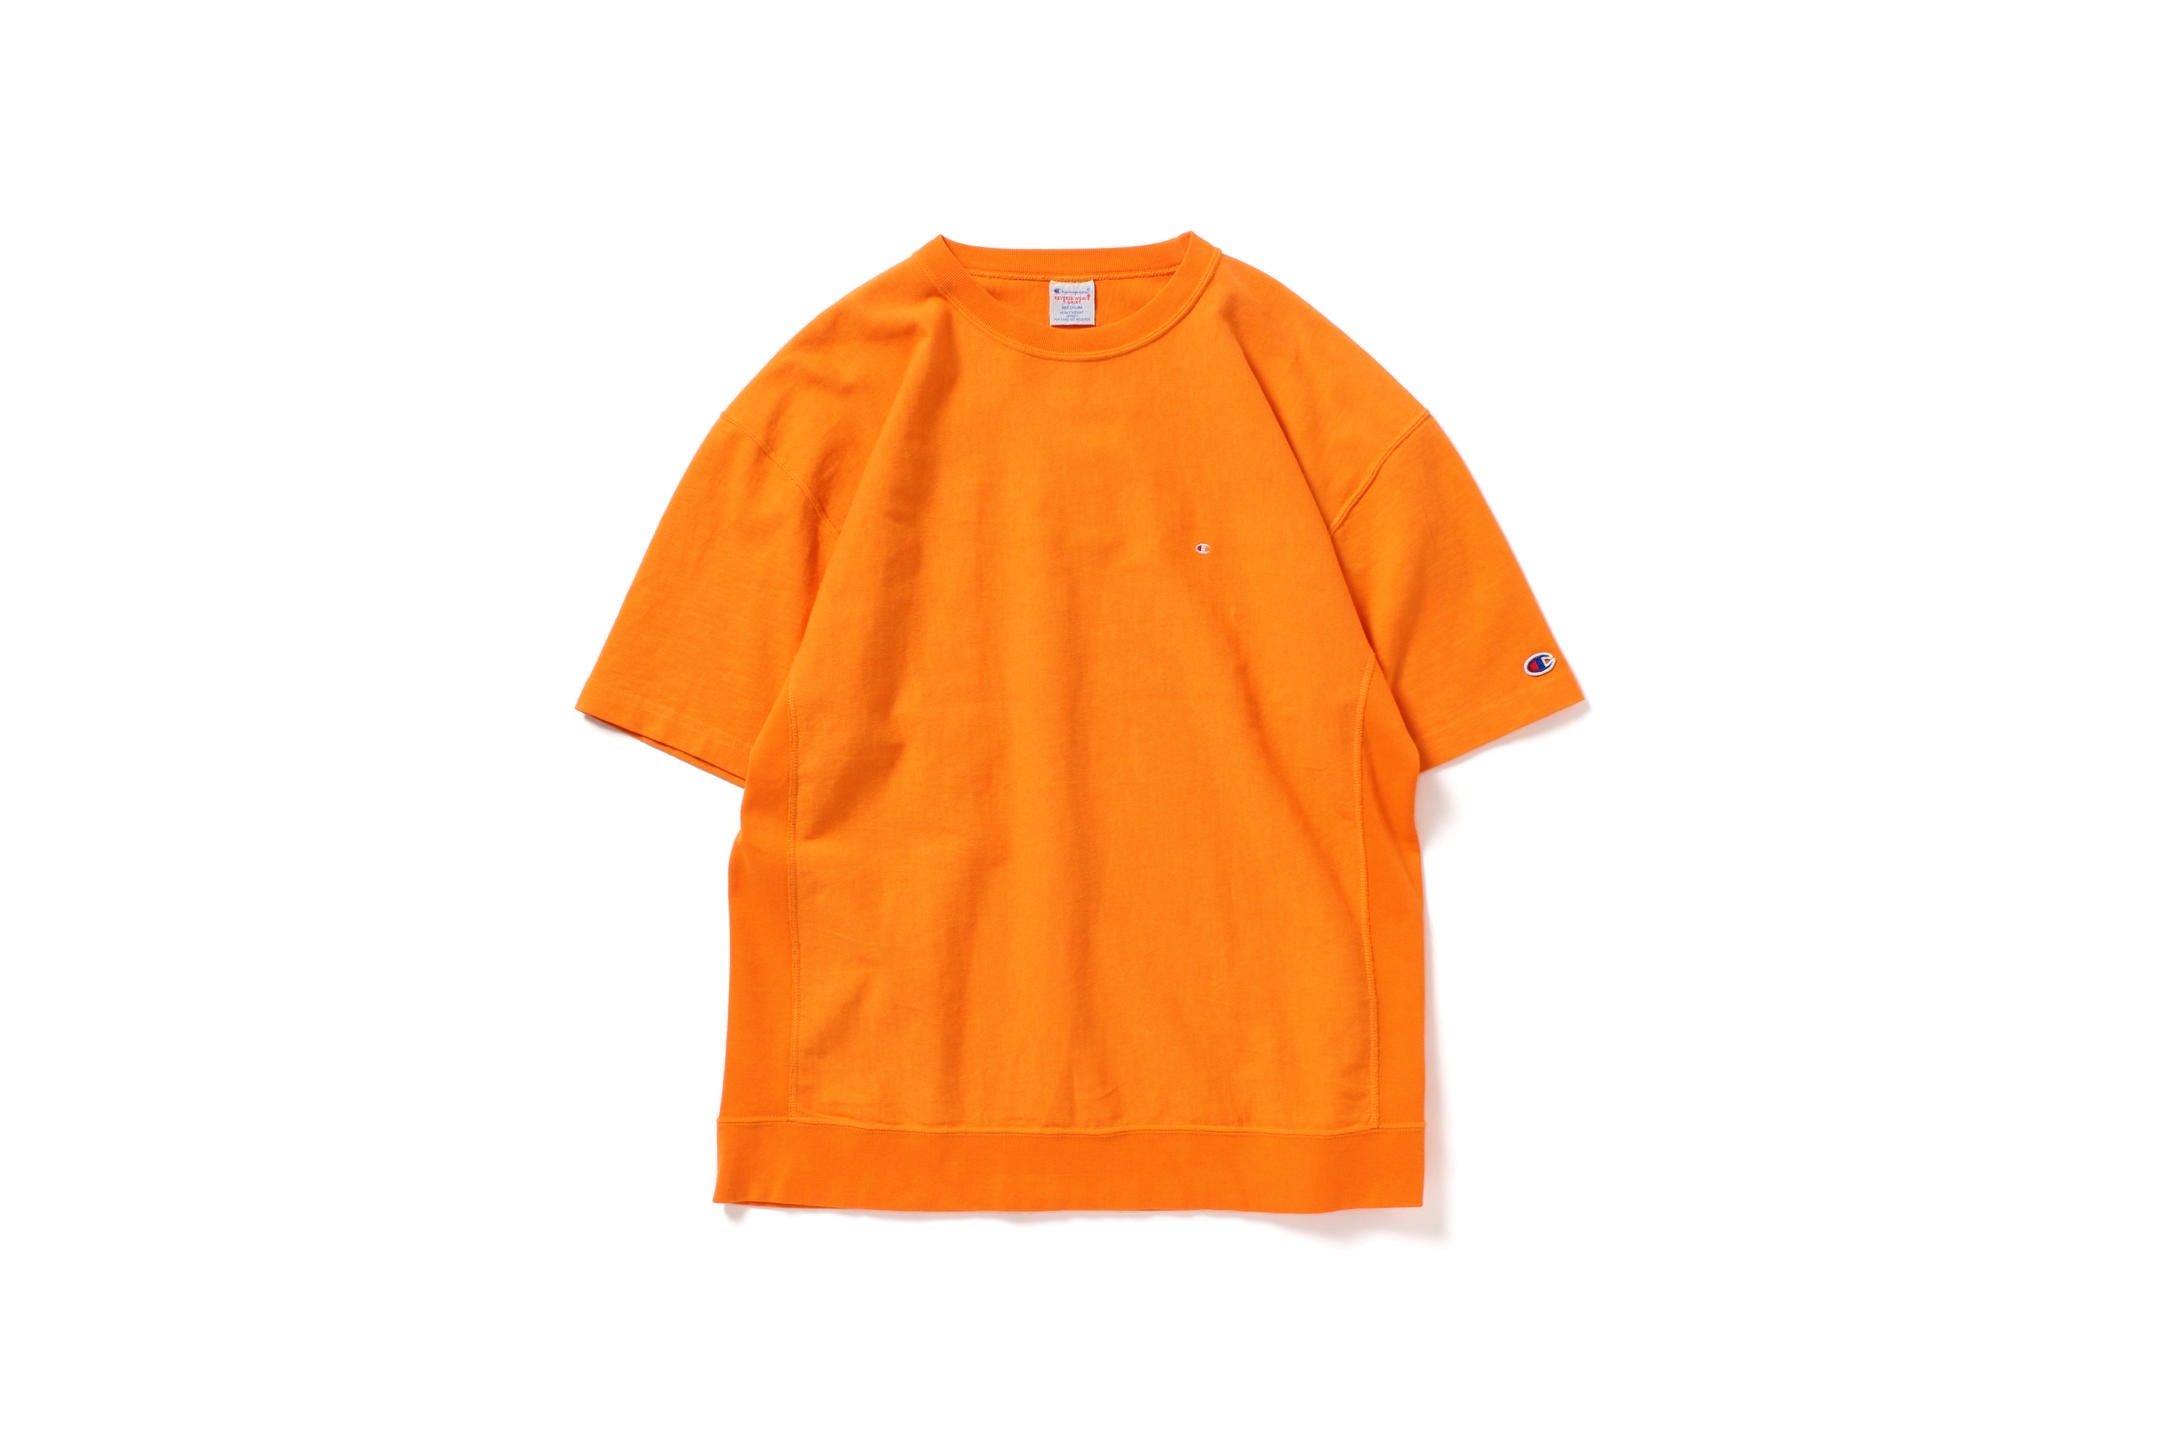 BEAMS x Champion Reverse Weave 联名 T-Shirt 系列